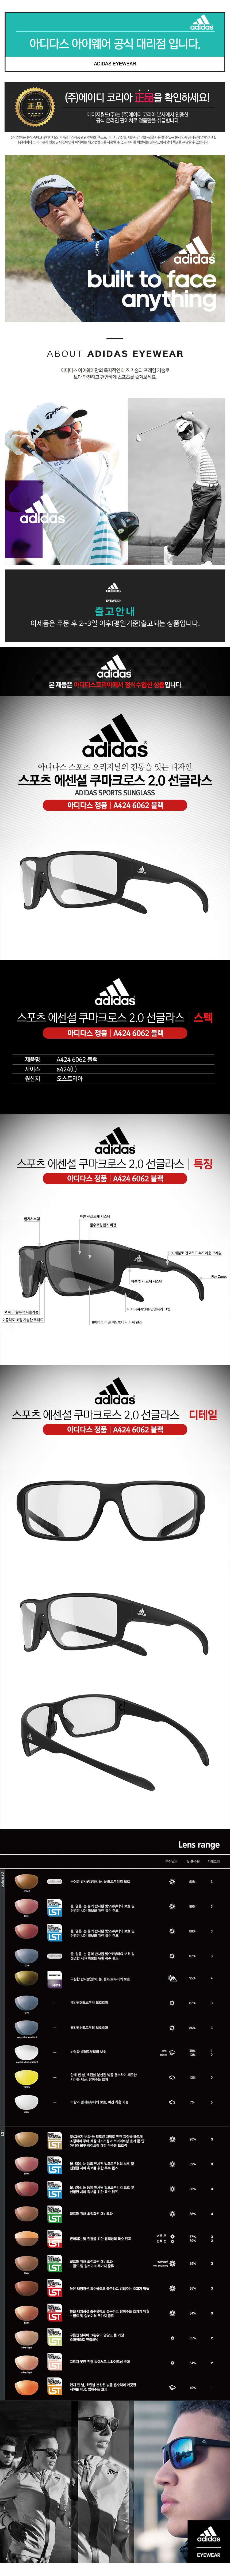 adidas_6062black_18.jpg